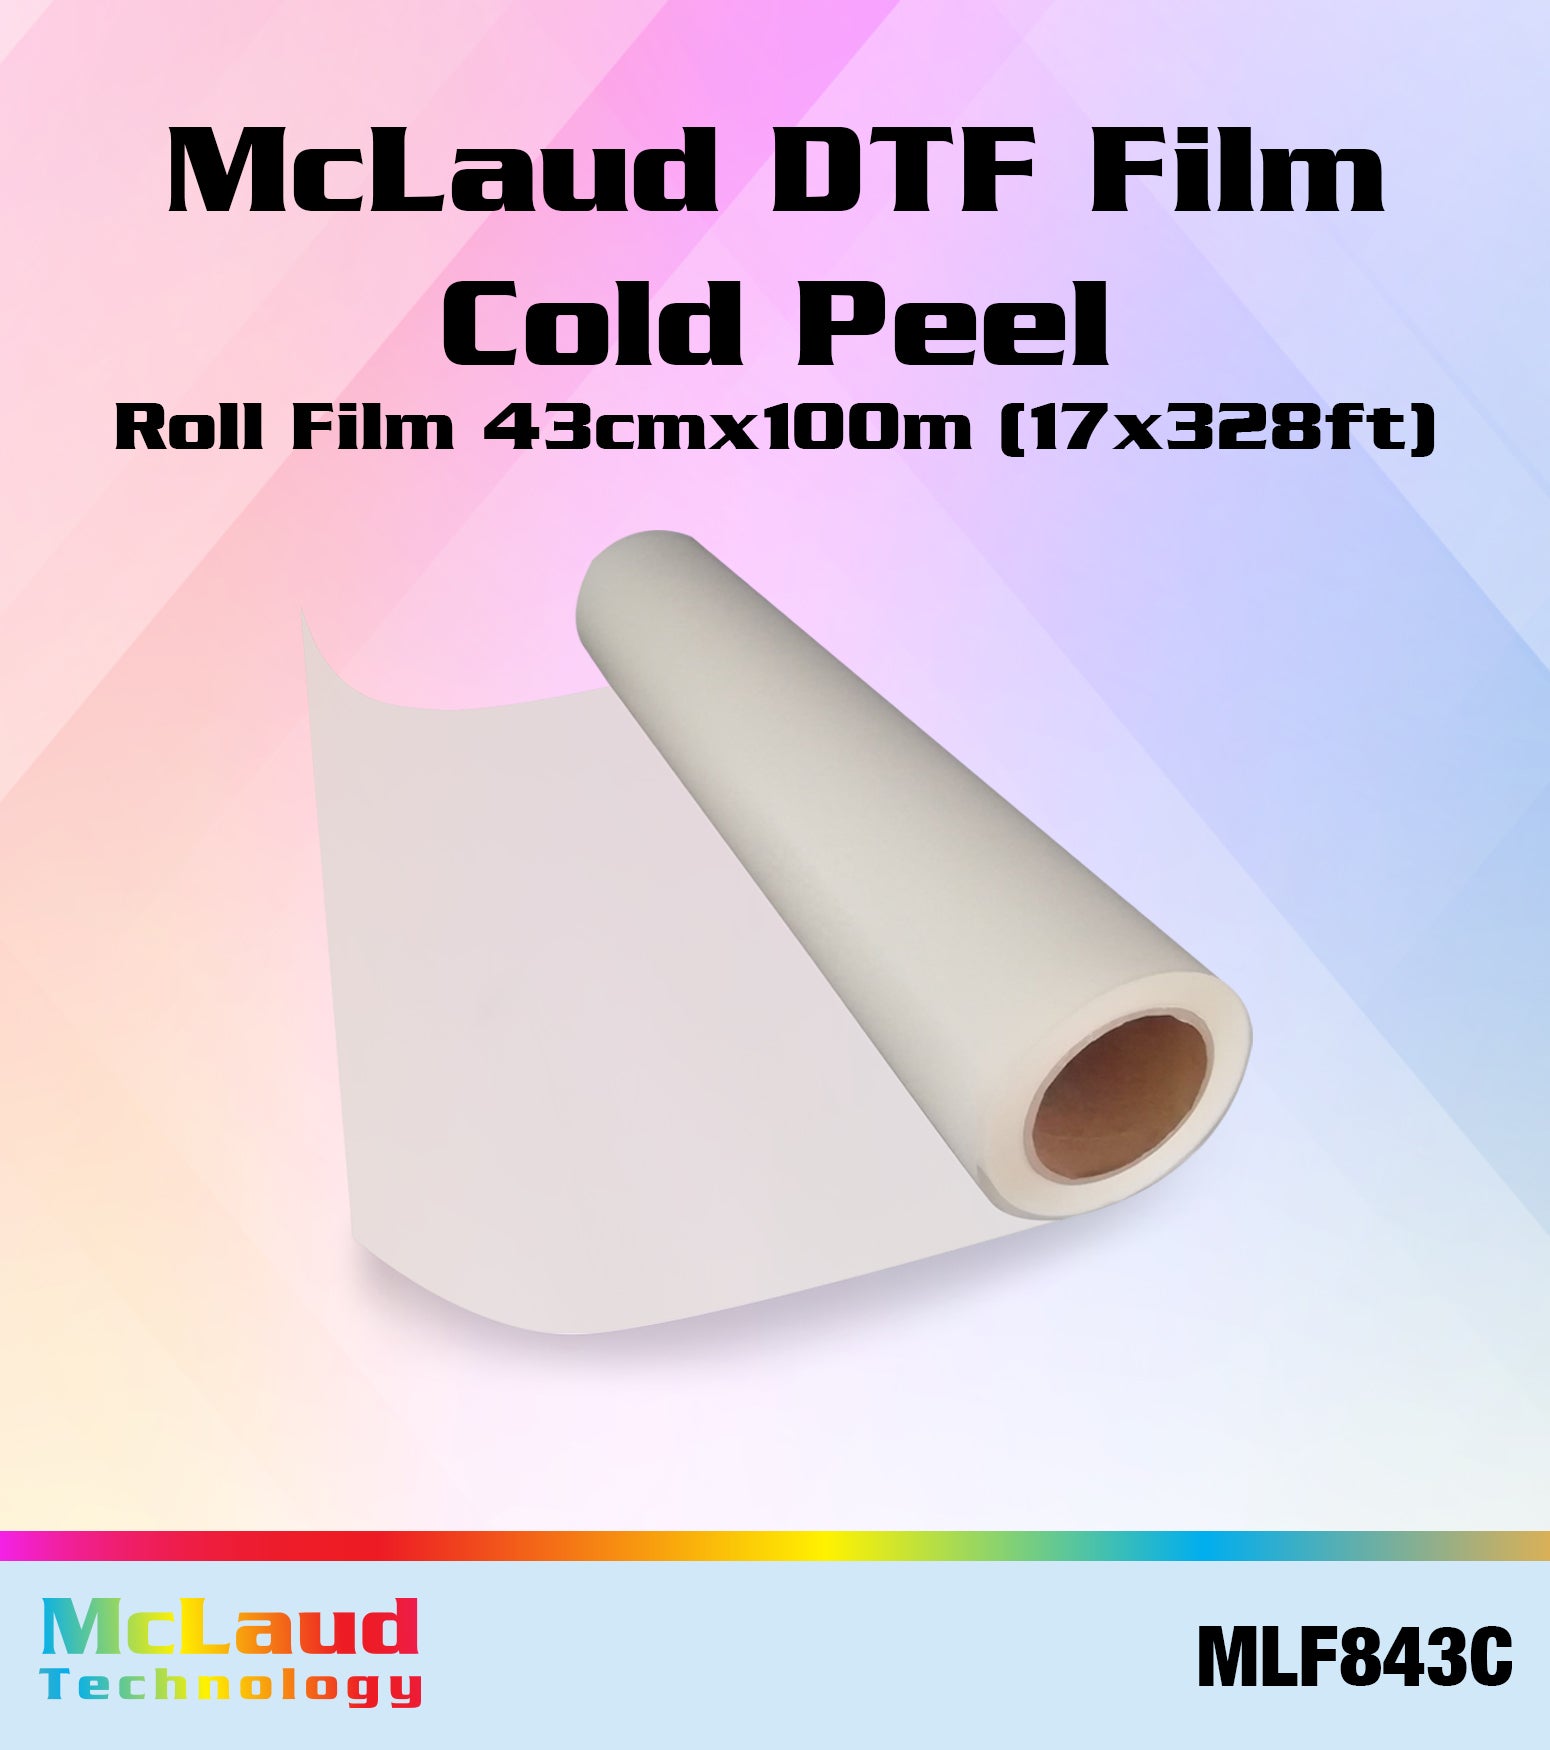 DTF Film Rolls (Matte, Warm/Cold Peel)